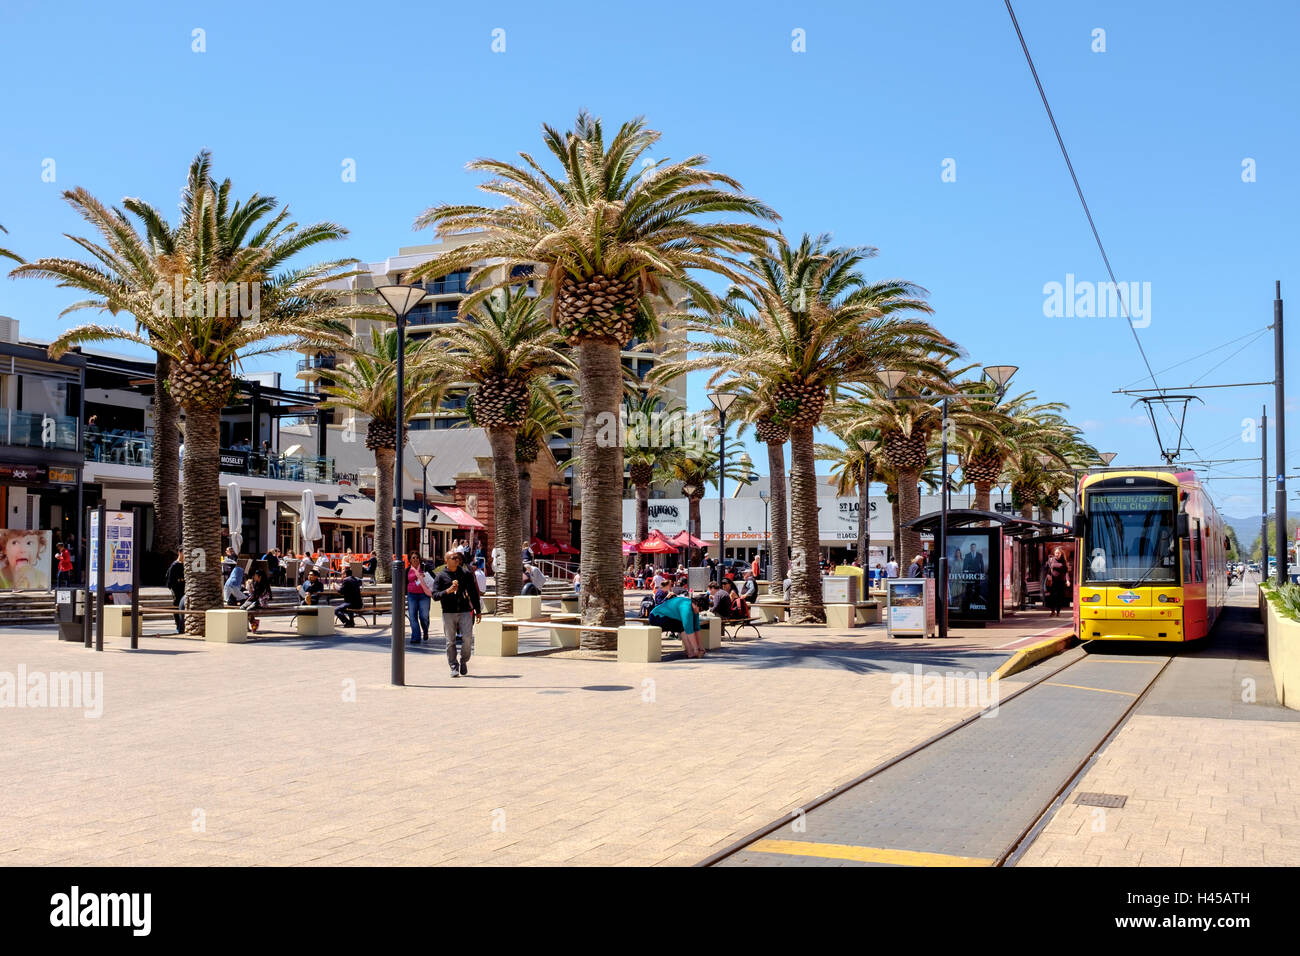 'Moseley Square' Glenelg, South Australia's most popular seaside entertainment area. Stock Photo